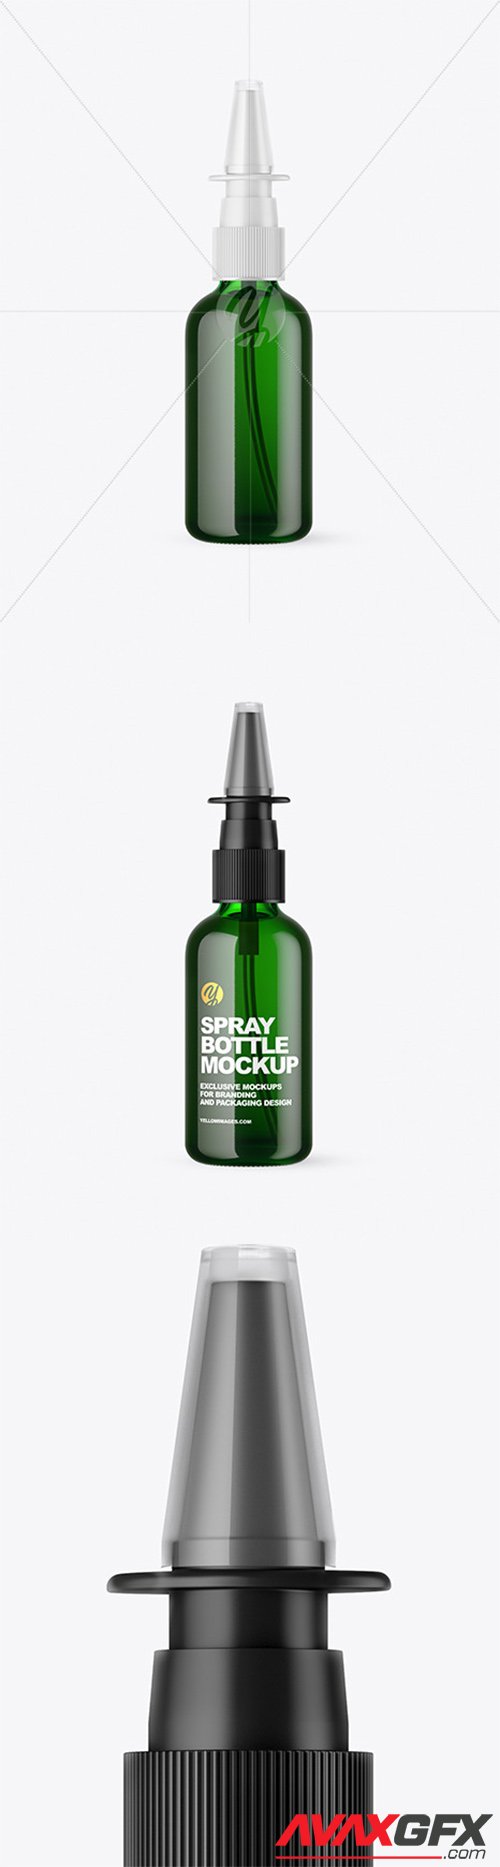 Green Glass Nasal Spray Bottle Mockup 66536